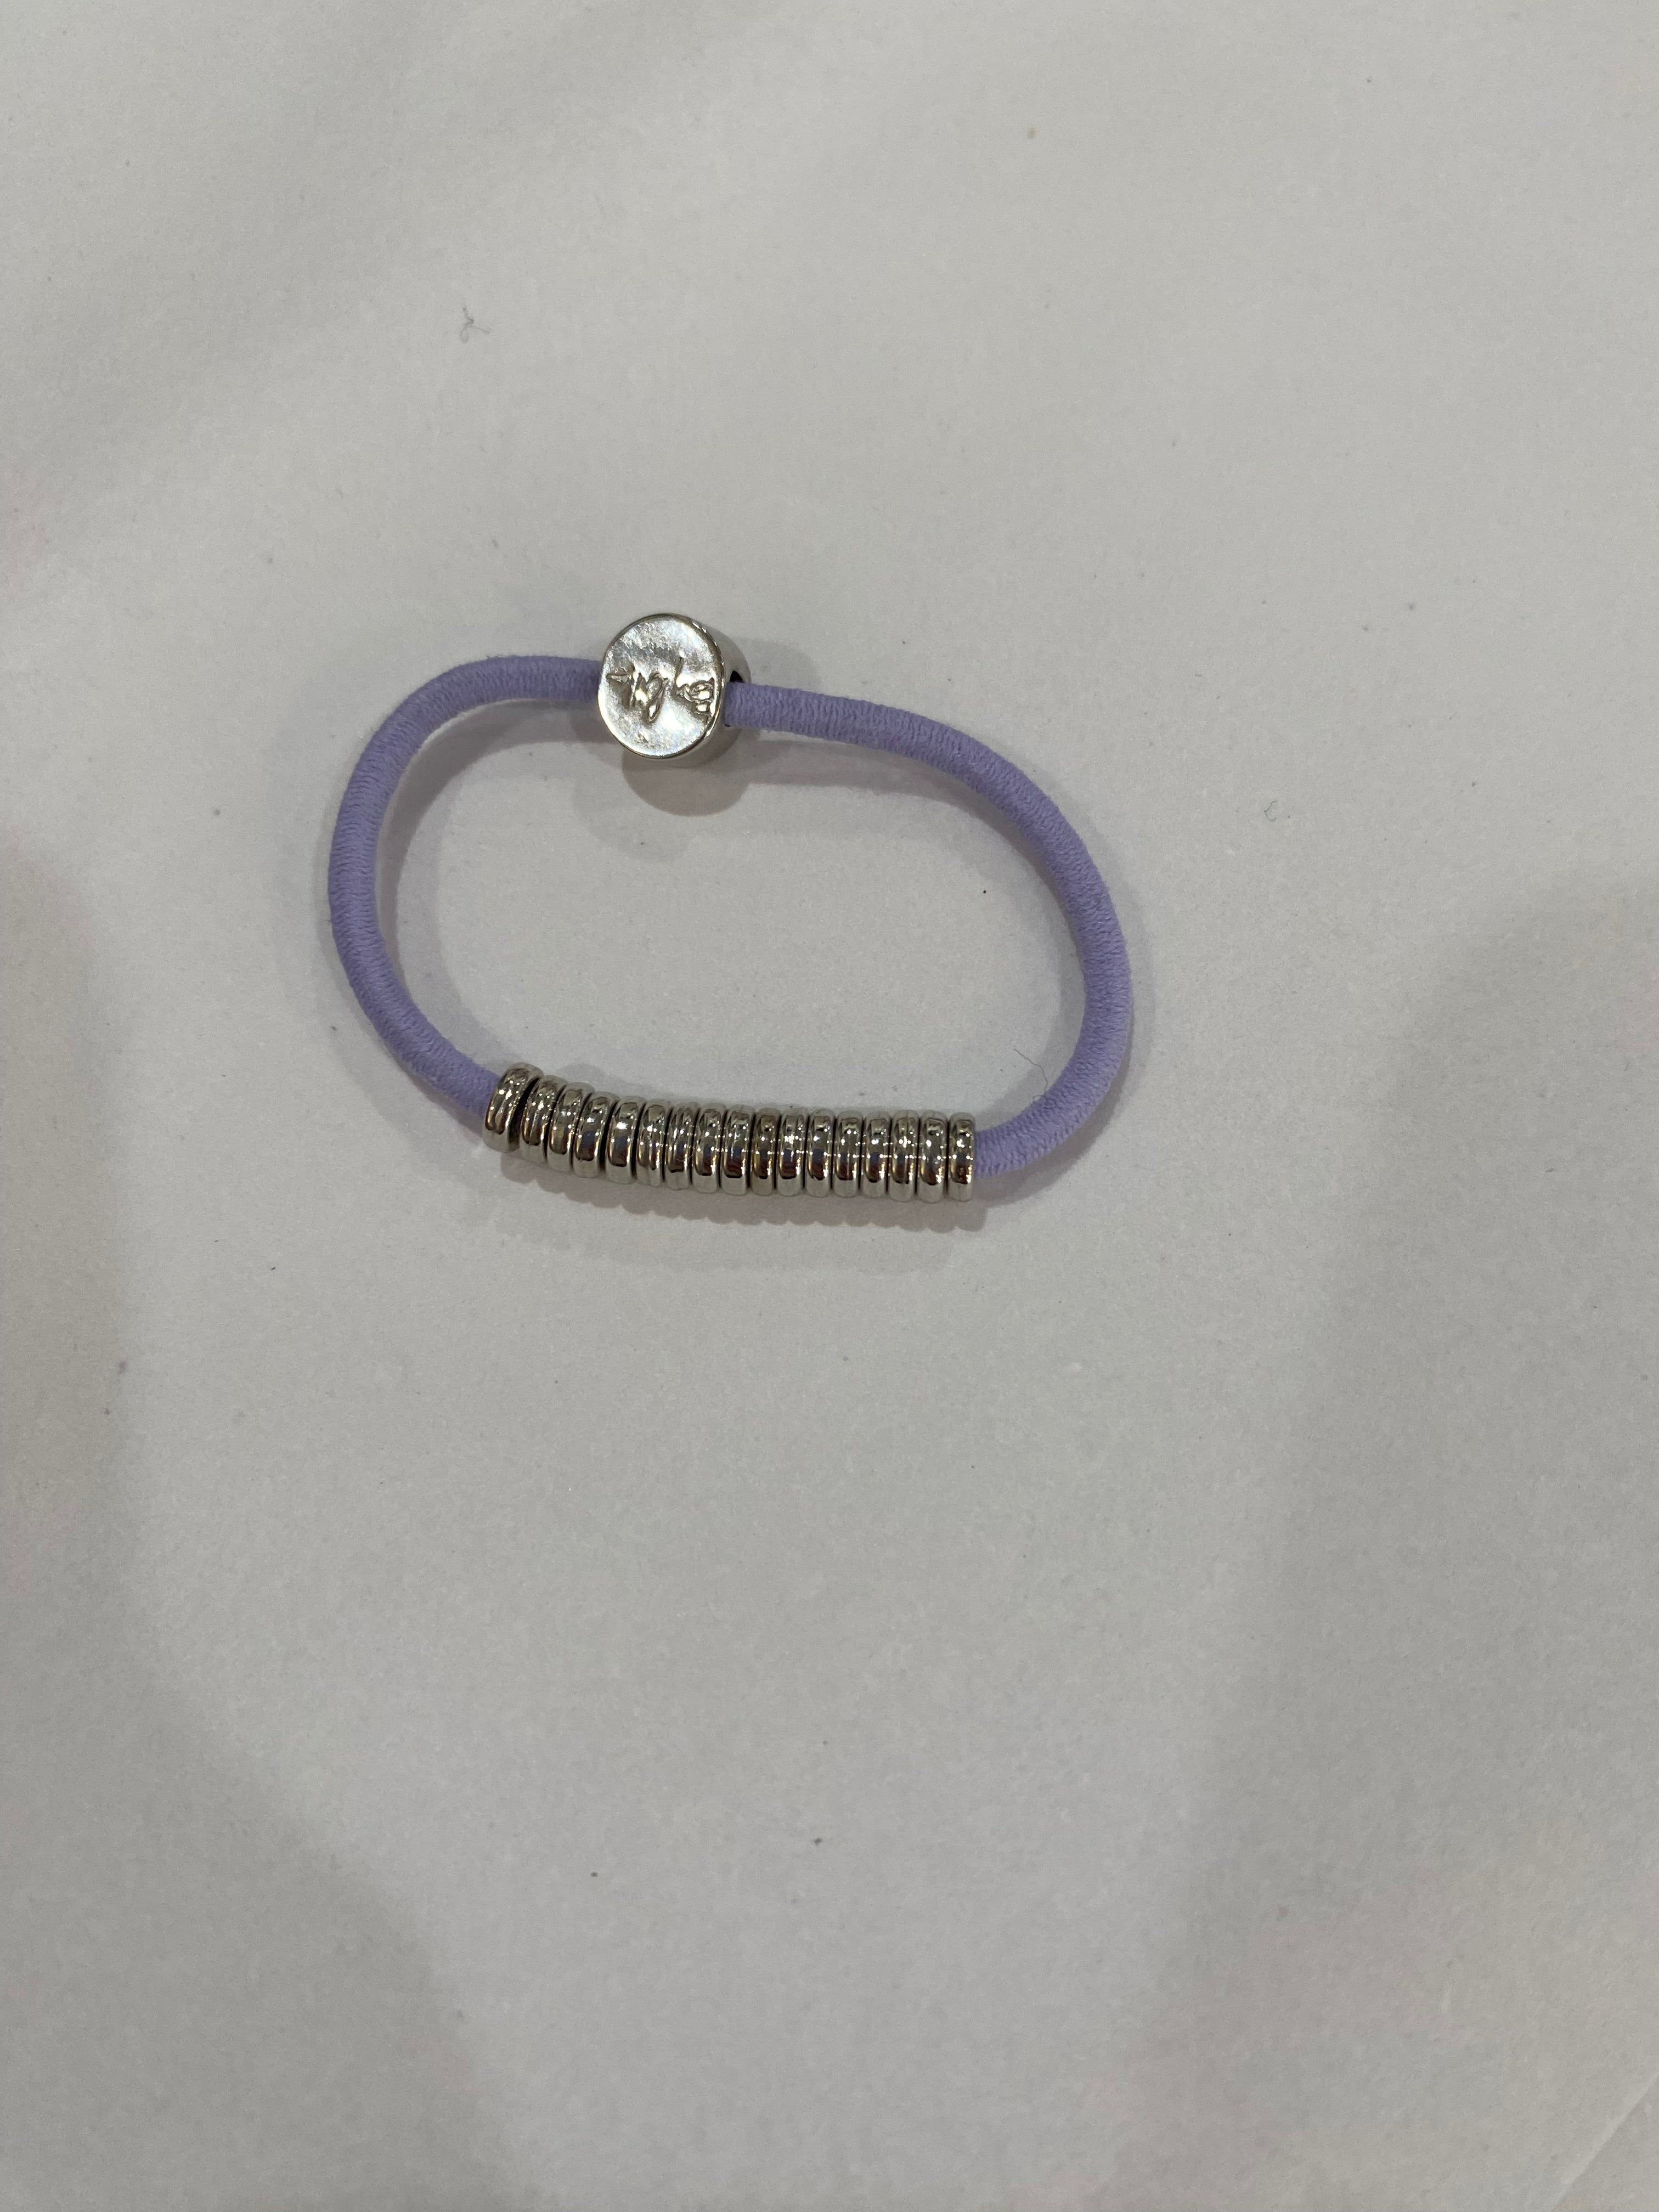 Lavender bylilla hair tie bracelet